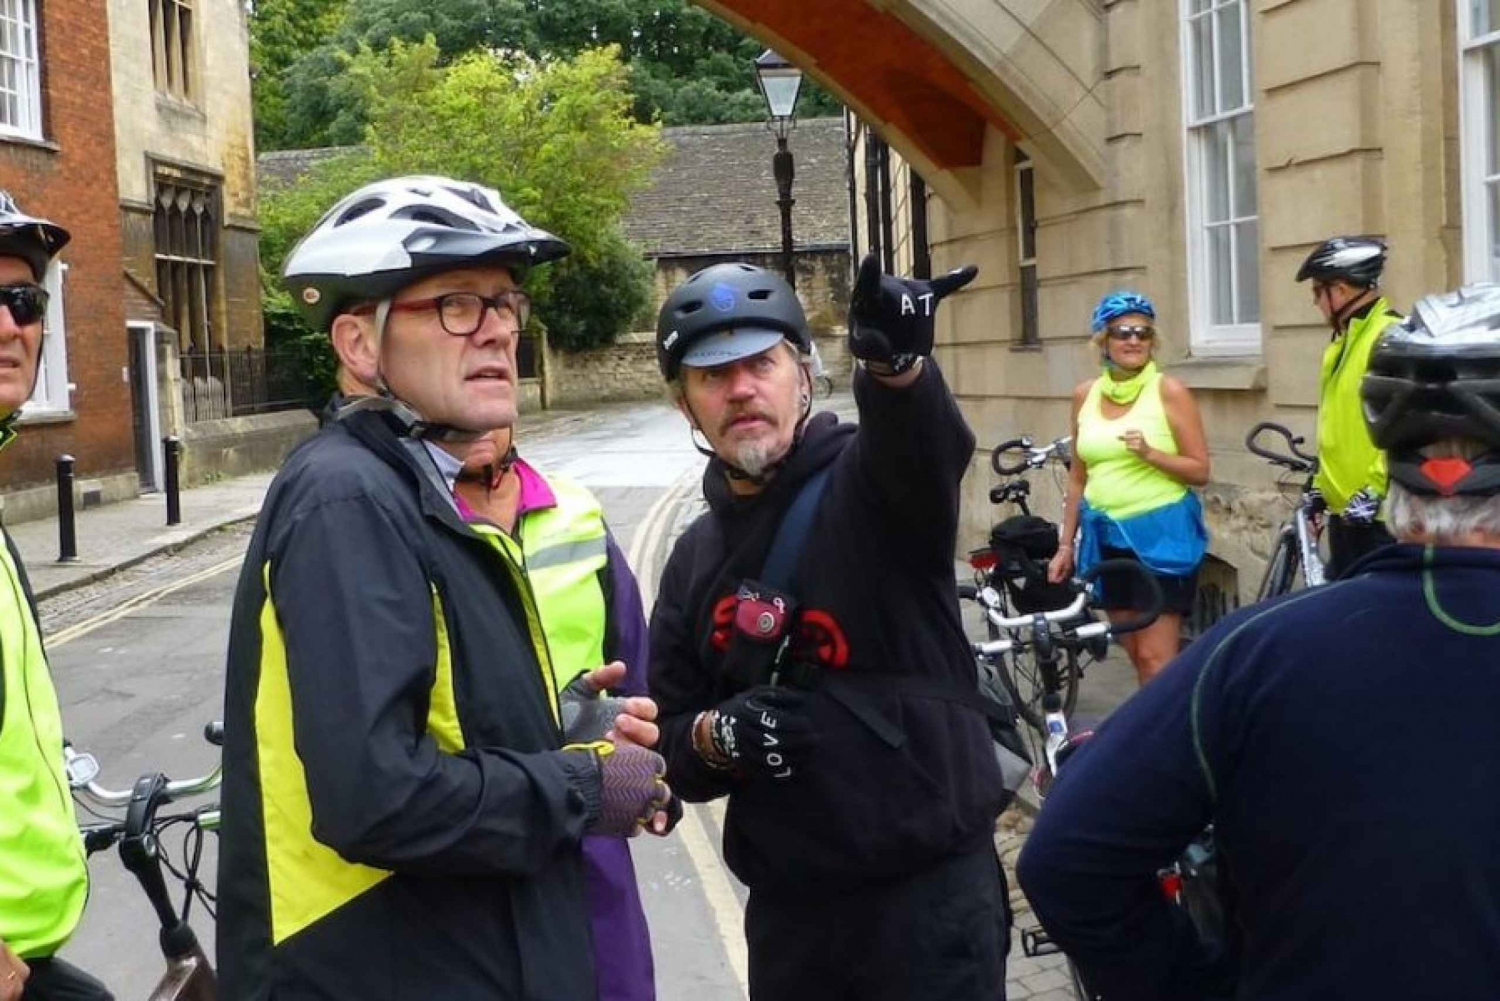 Oxford: Excursión en bici con guía local